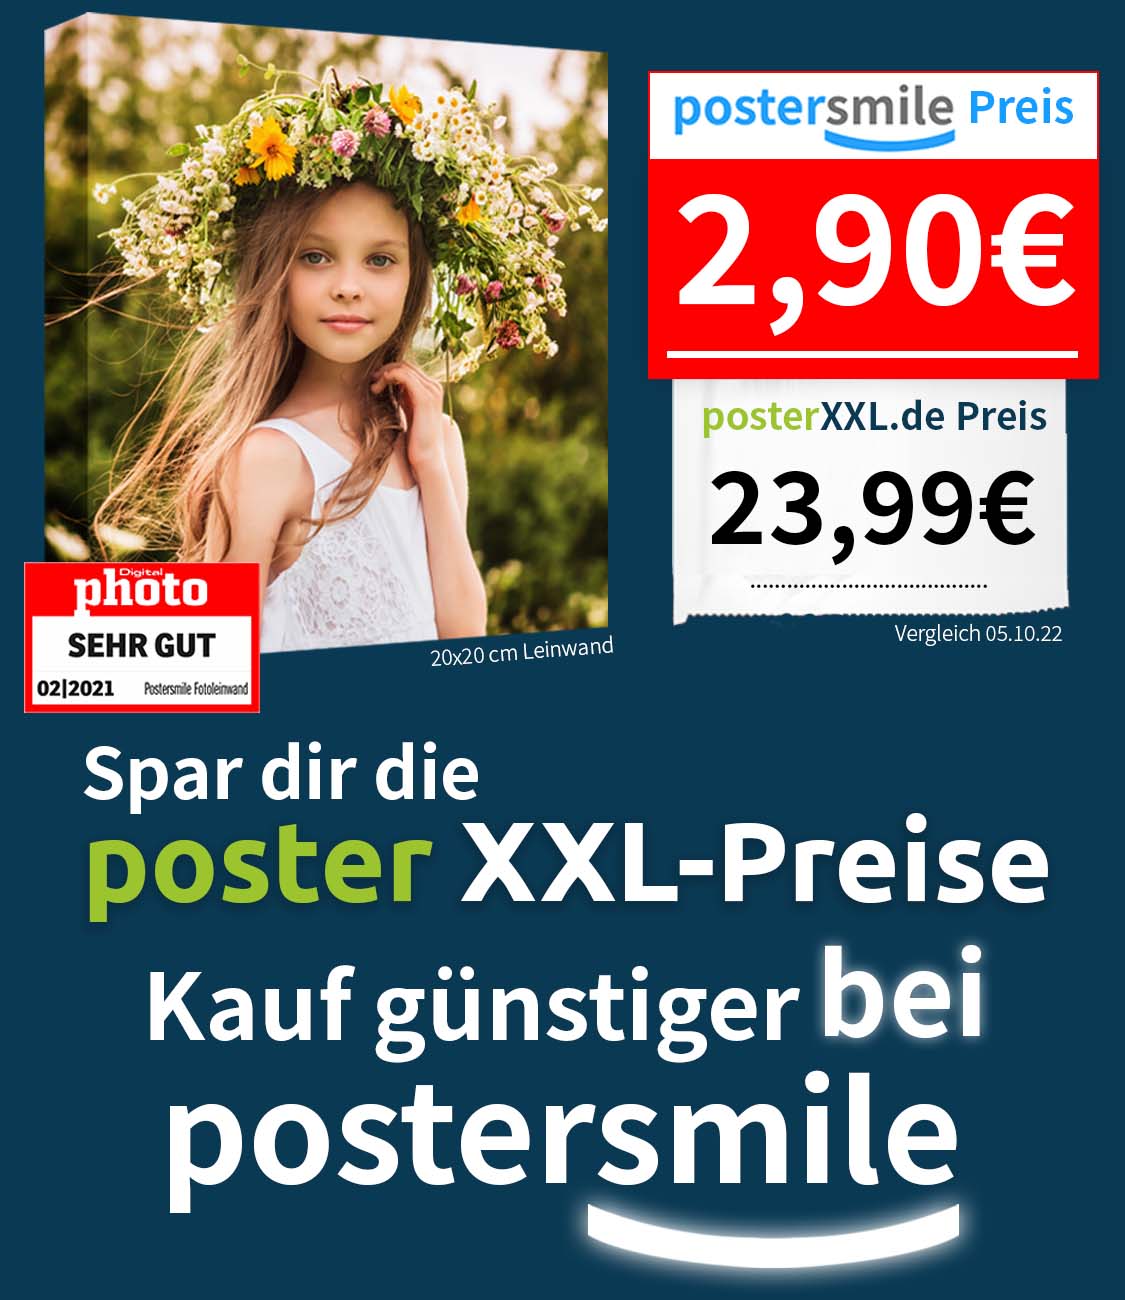 Fotoleinwand günstig - Foto auf Leinwand Preisvergleich postersmile.de vs. posterxxl.de